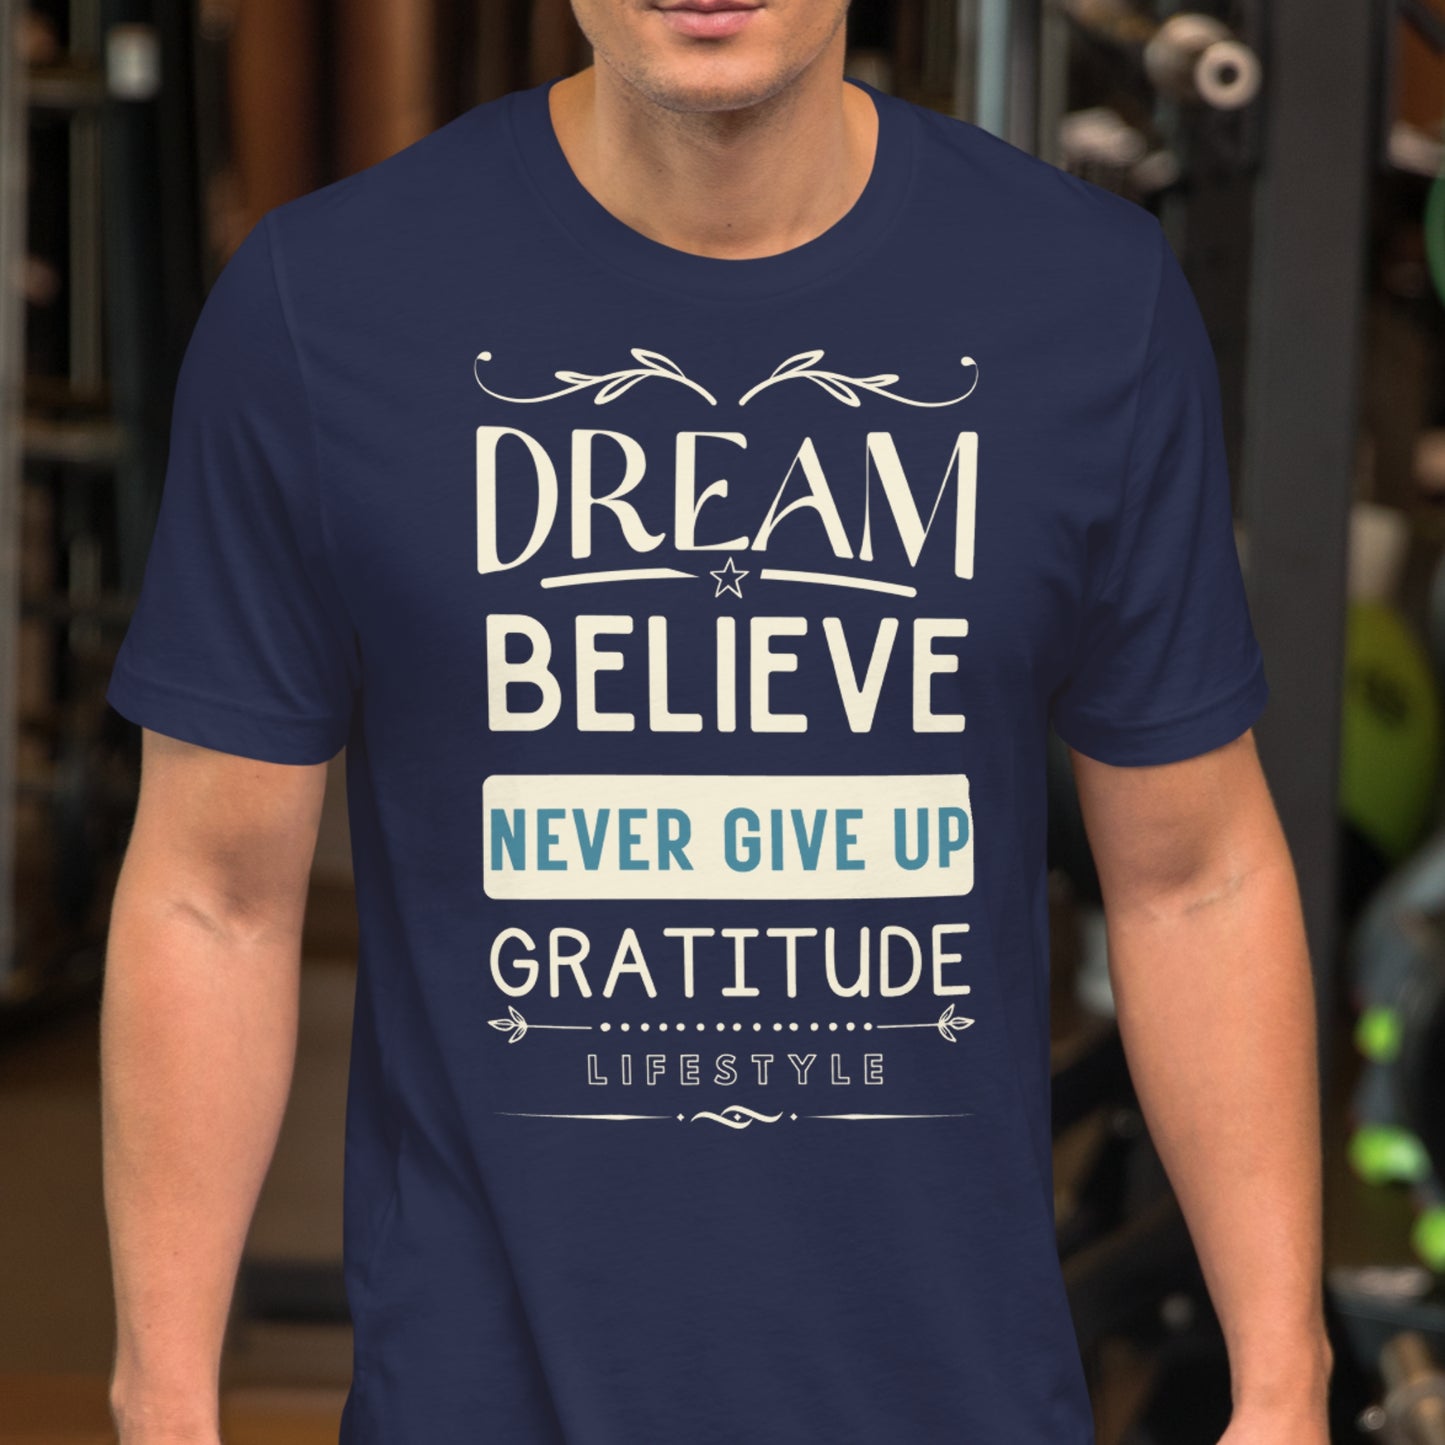 Self-Improvement T-Shirt - Inspirational Lifestyle Wear